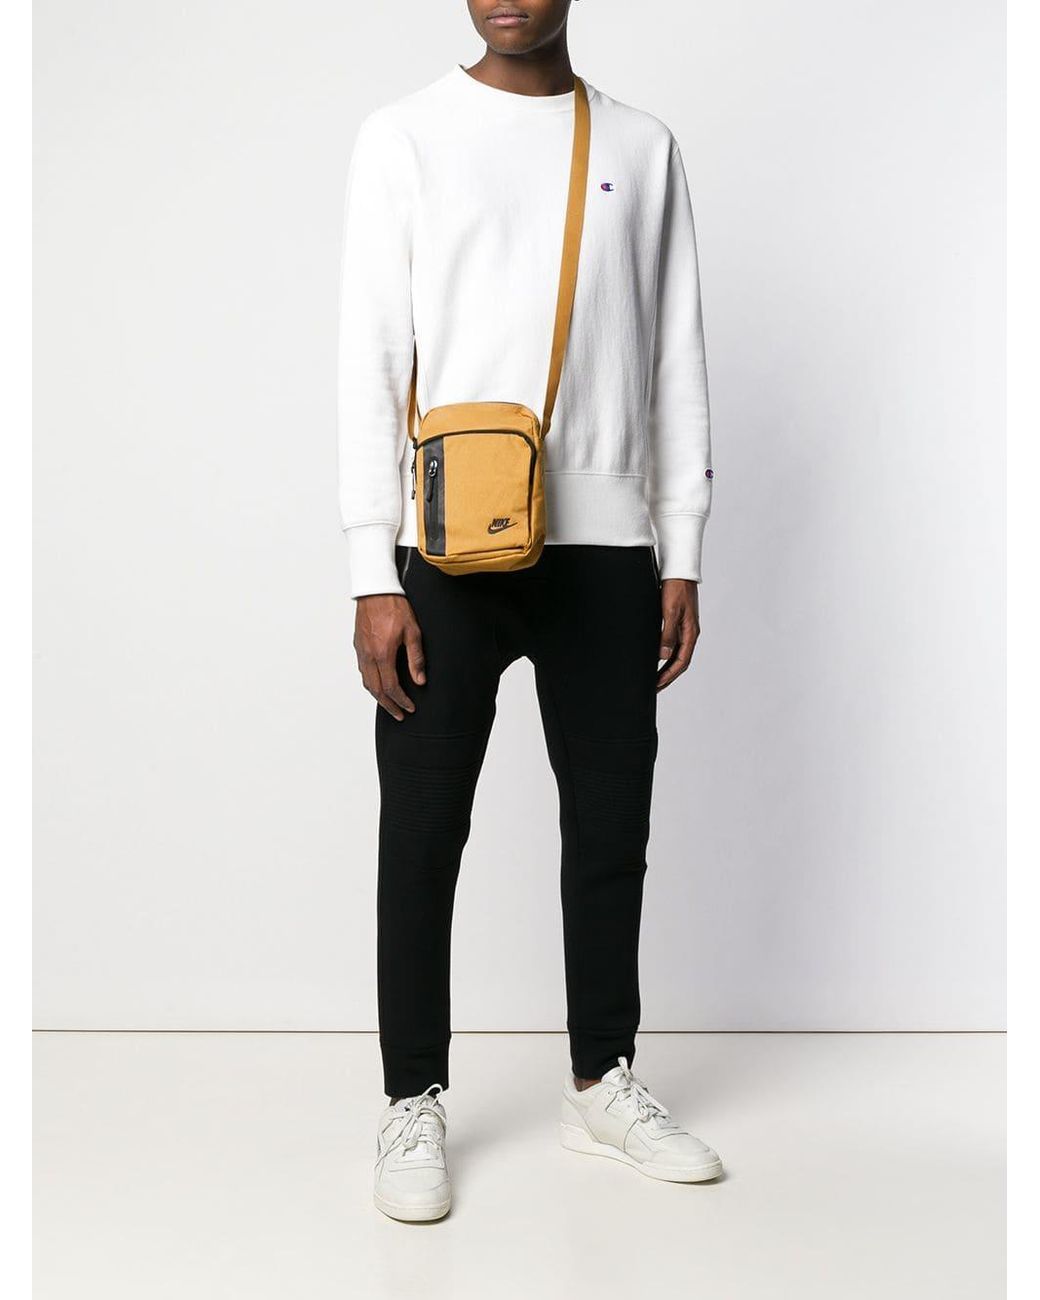 Nike Men's Yellow Core Small Items 3.0 Bag